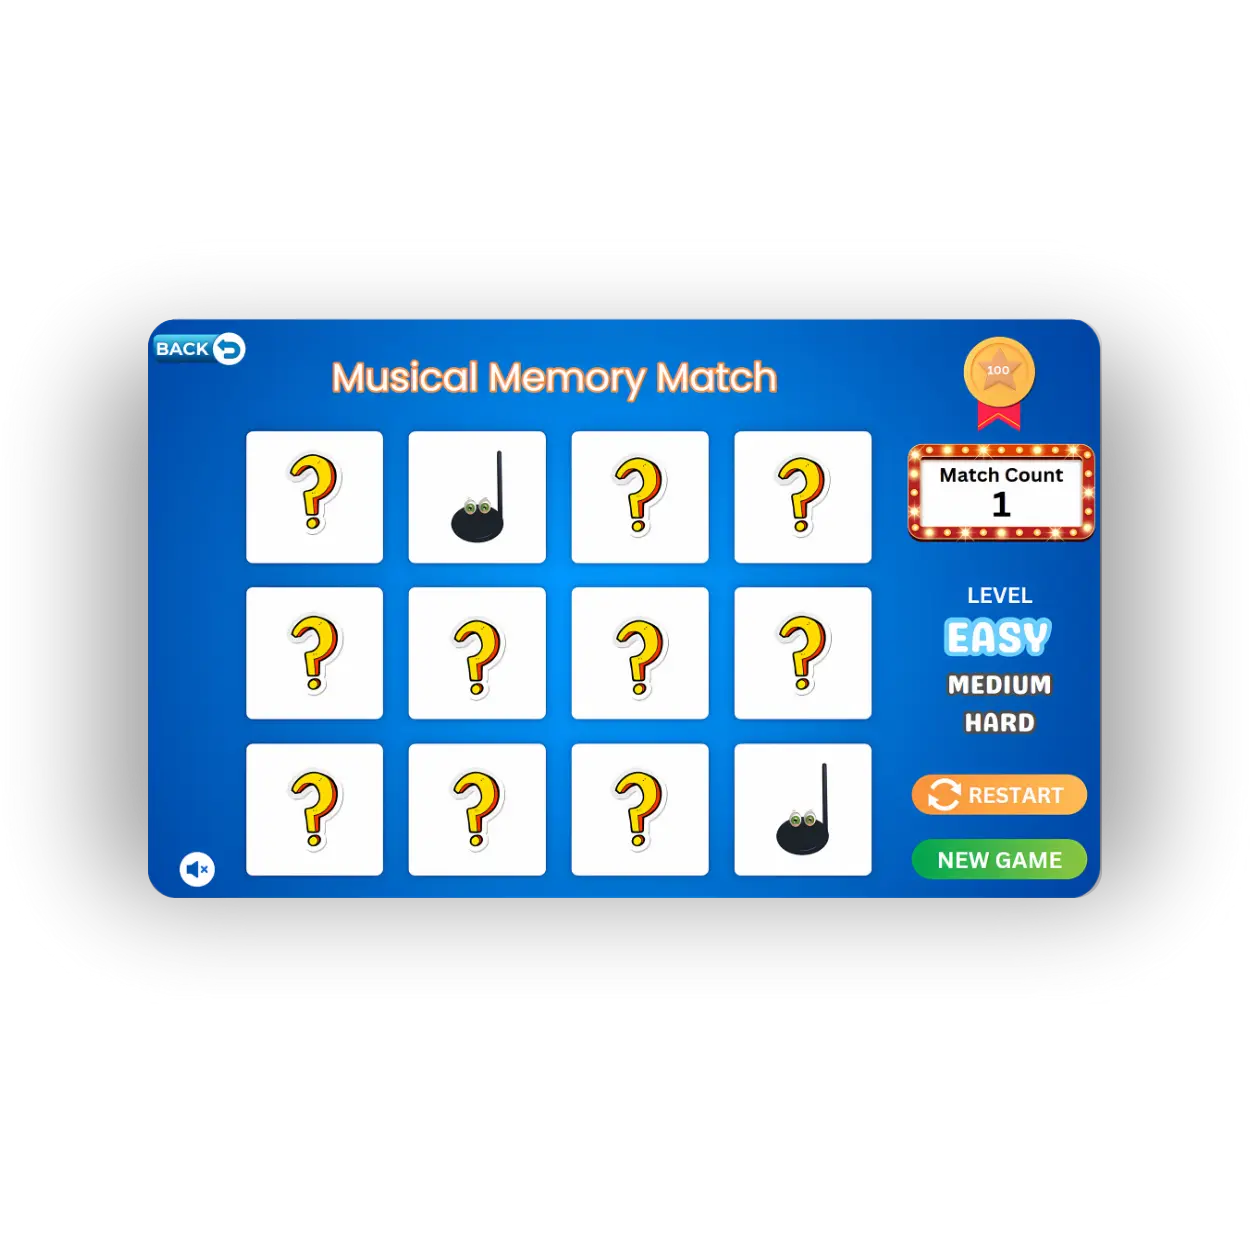 Screenshot of the “Musical Memory Match” game